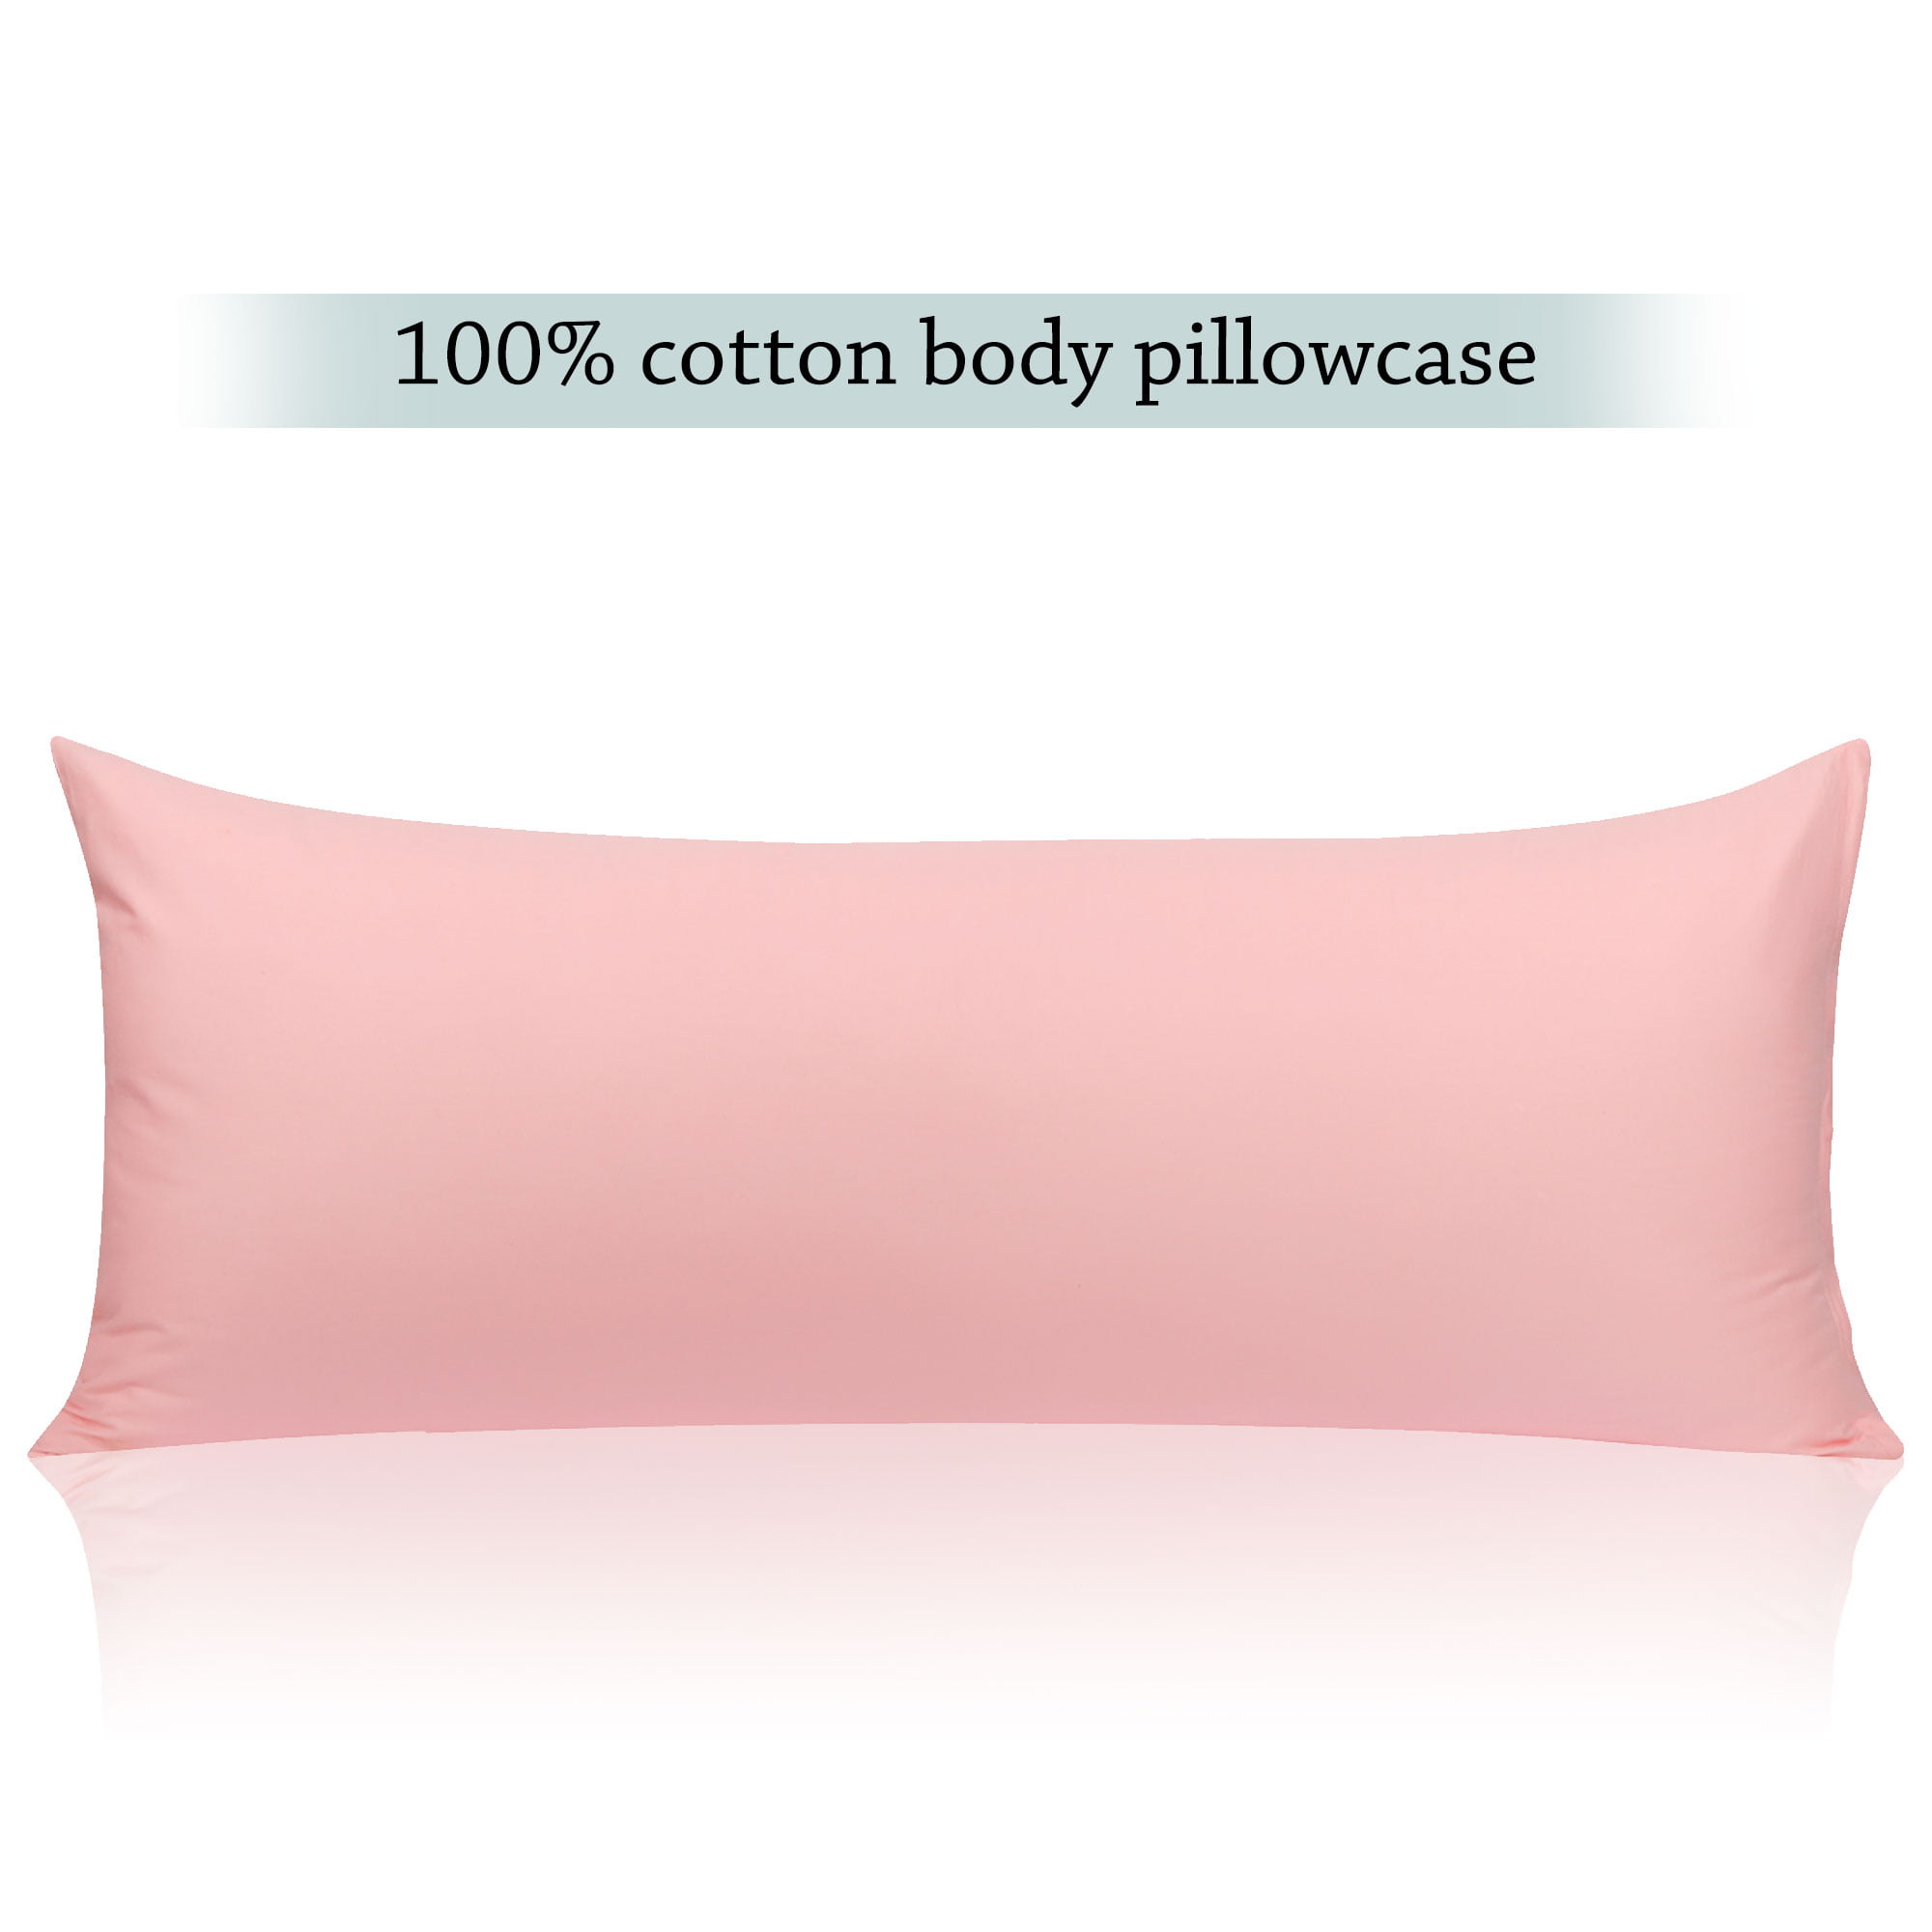 1-Unique Farm Animal Print 100% Cotton Standard Size Pillowcase  New & Handmade